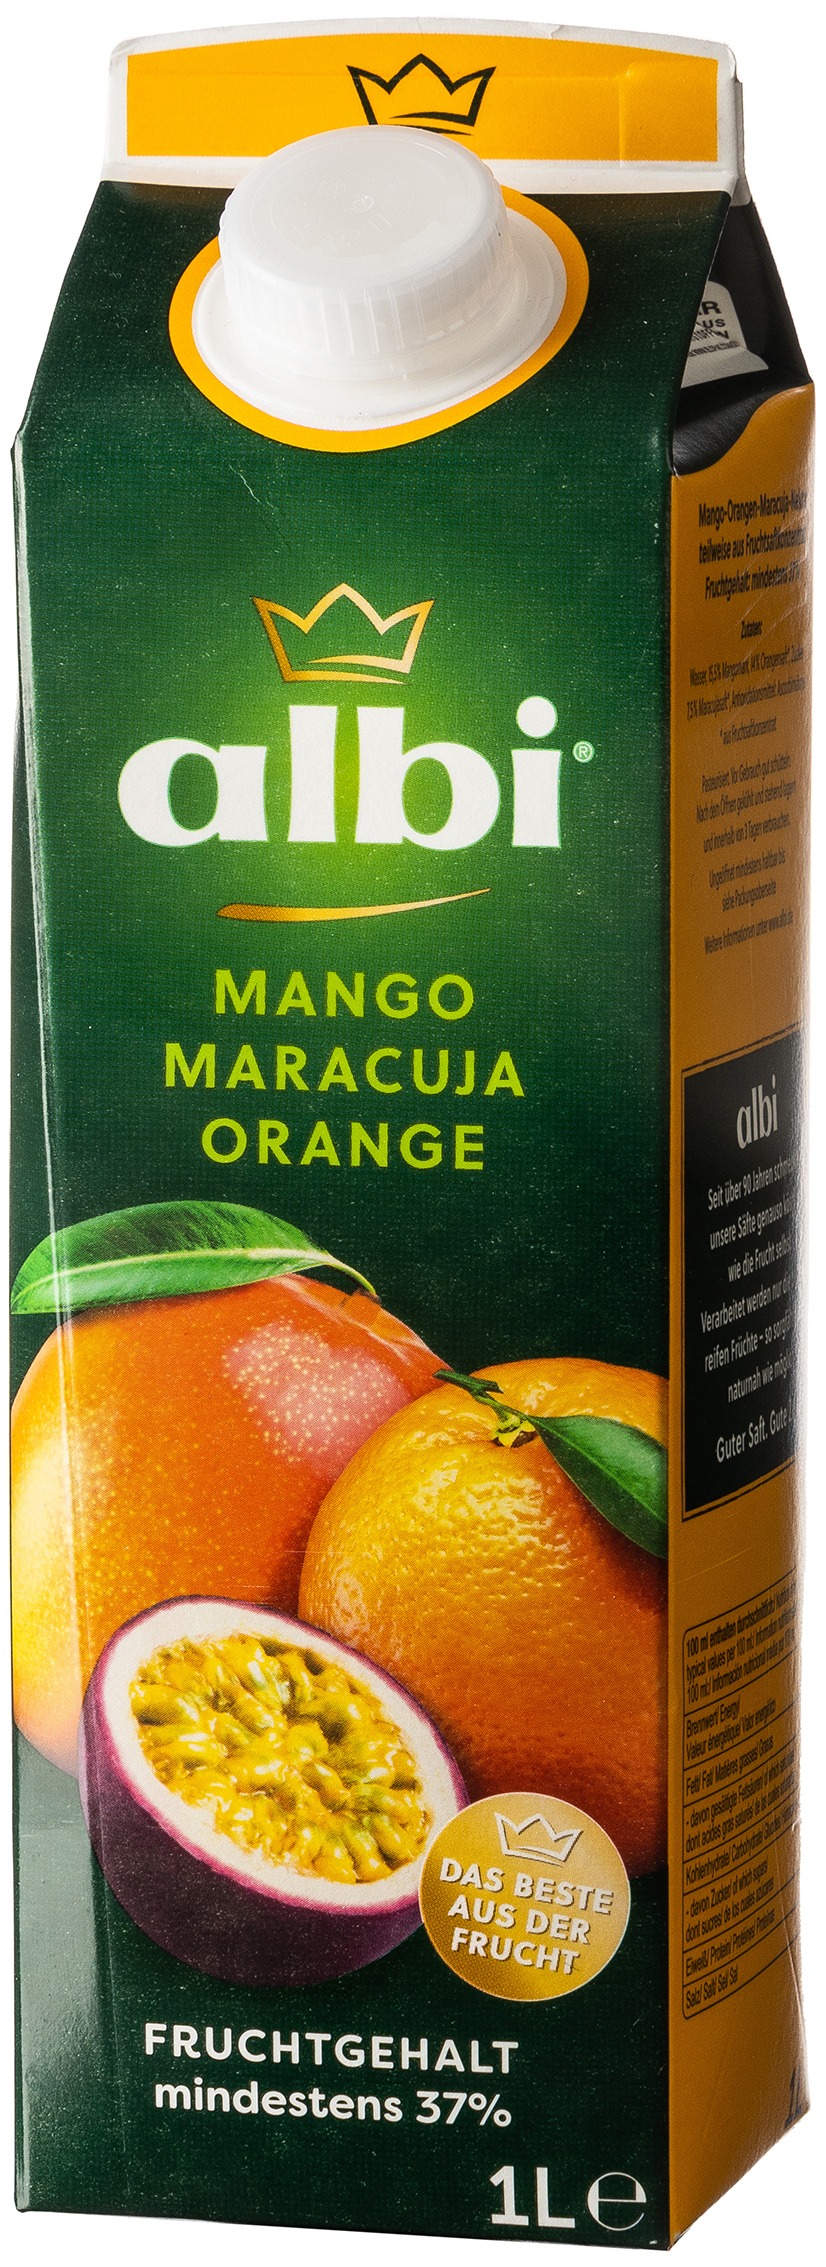 albi Mango-Maracuja-Orange 1,0L